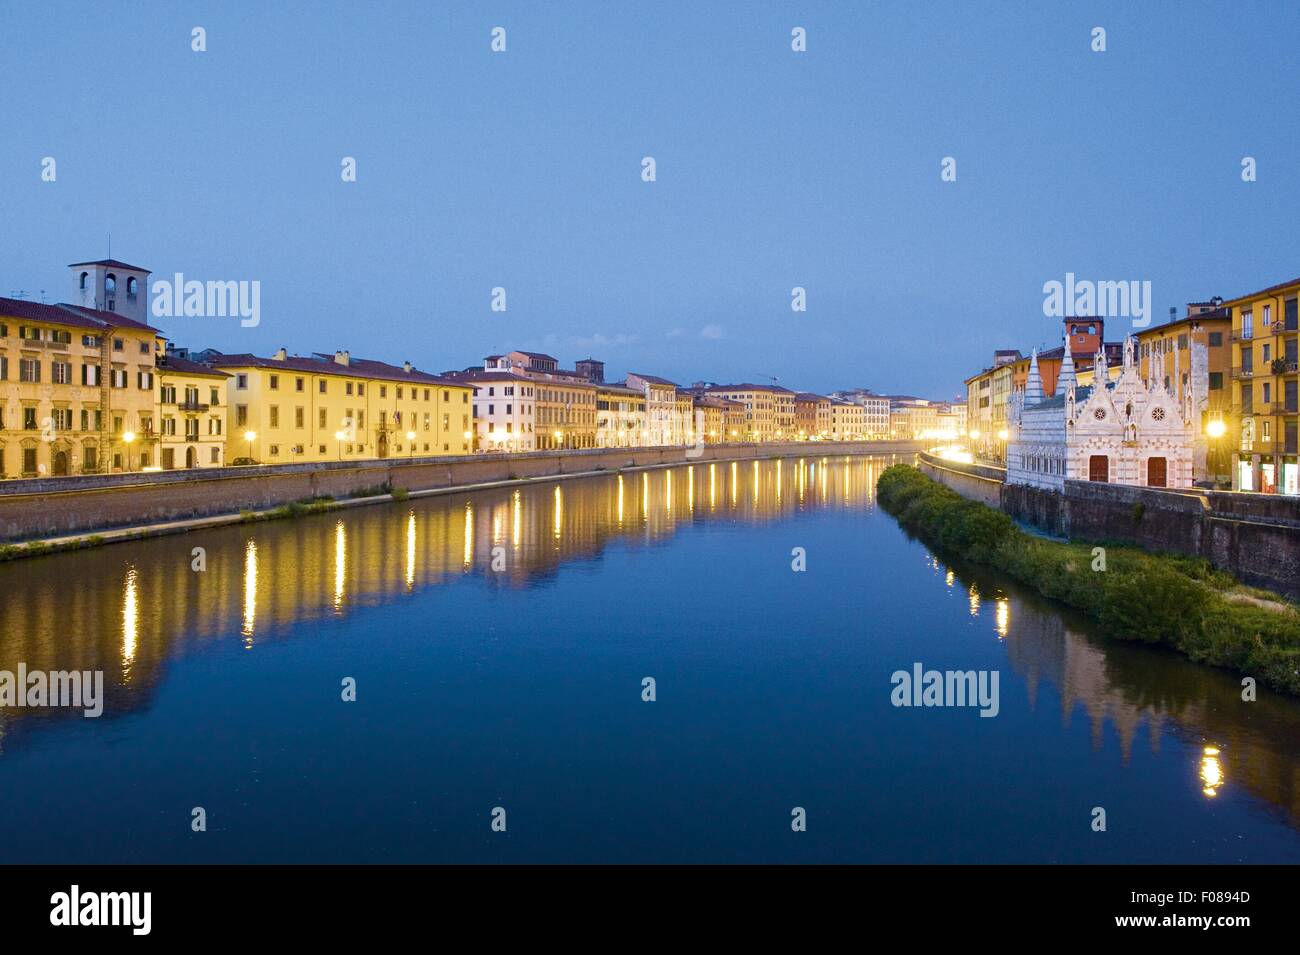 View of illuminated Santa Maria Della Spina on the Arno river, Pisa, Italy Stock Photo